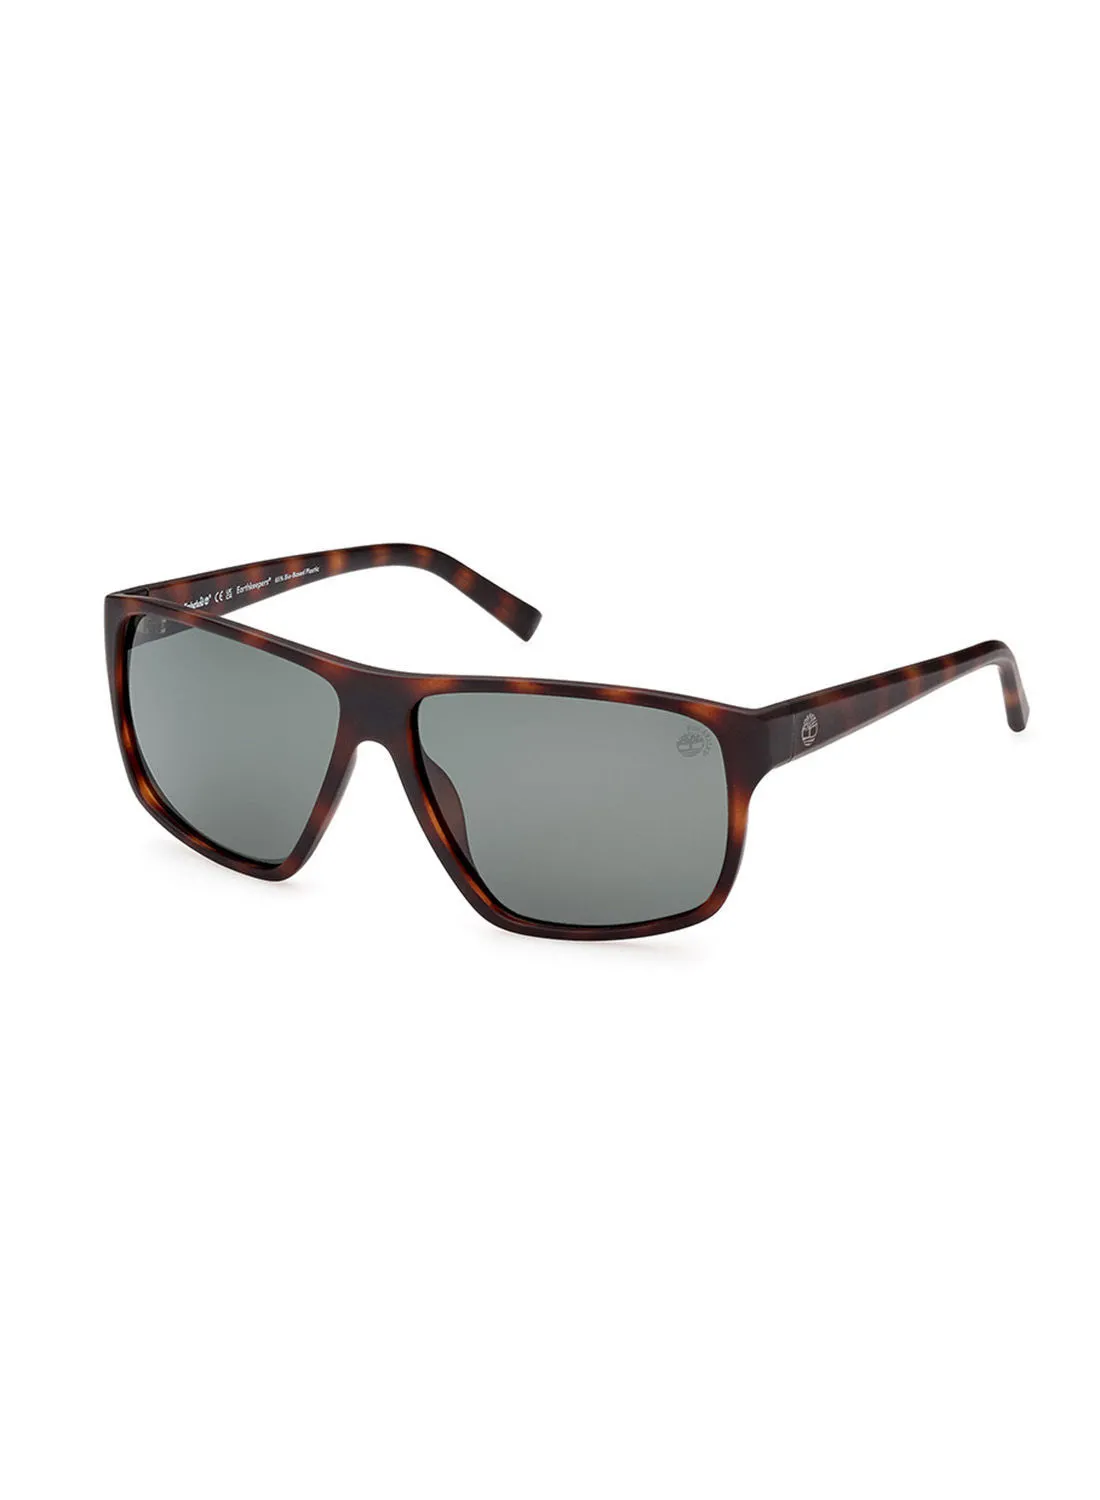 Timberland Sunglasses For Men TB929552R61